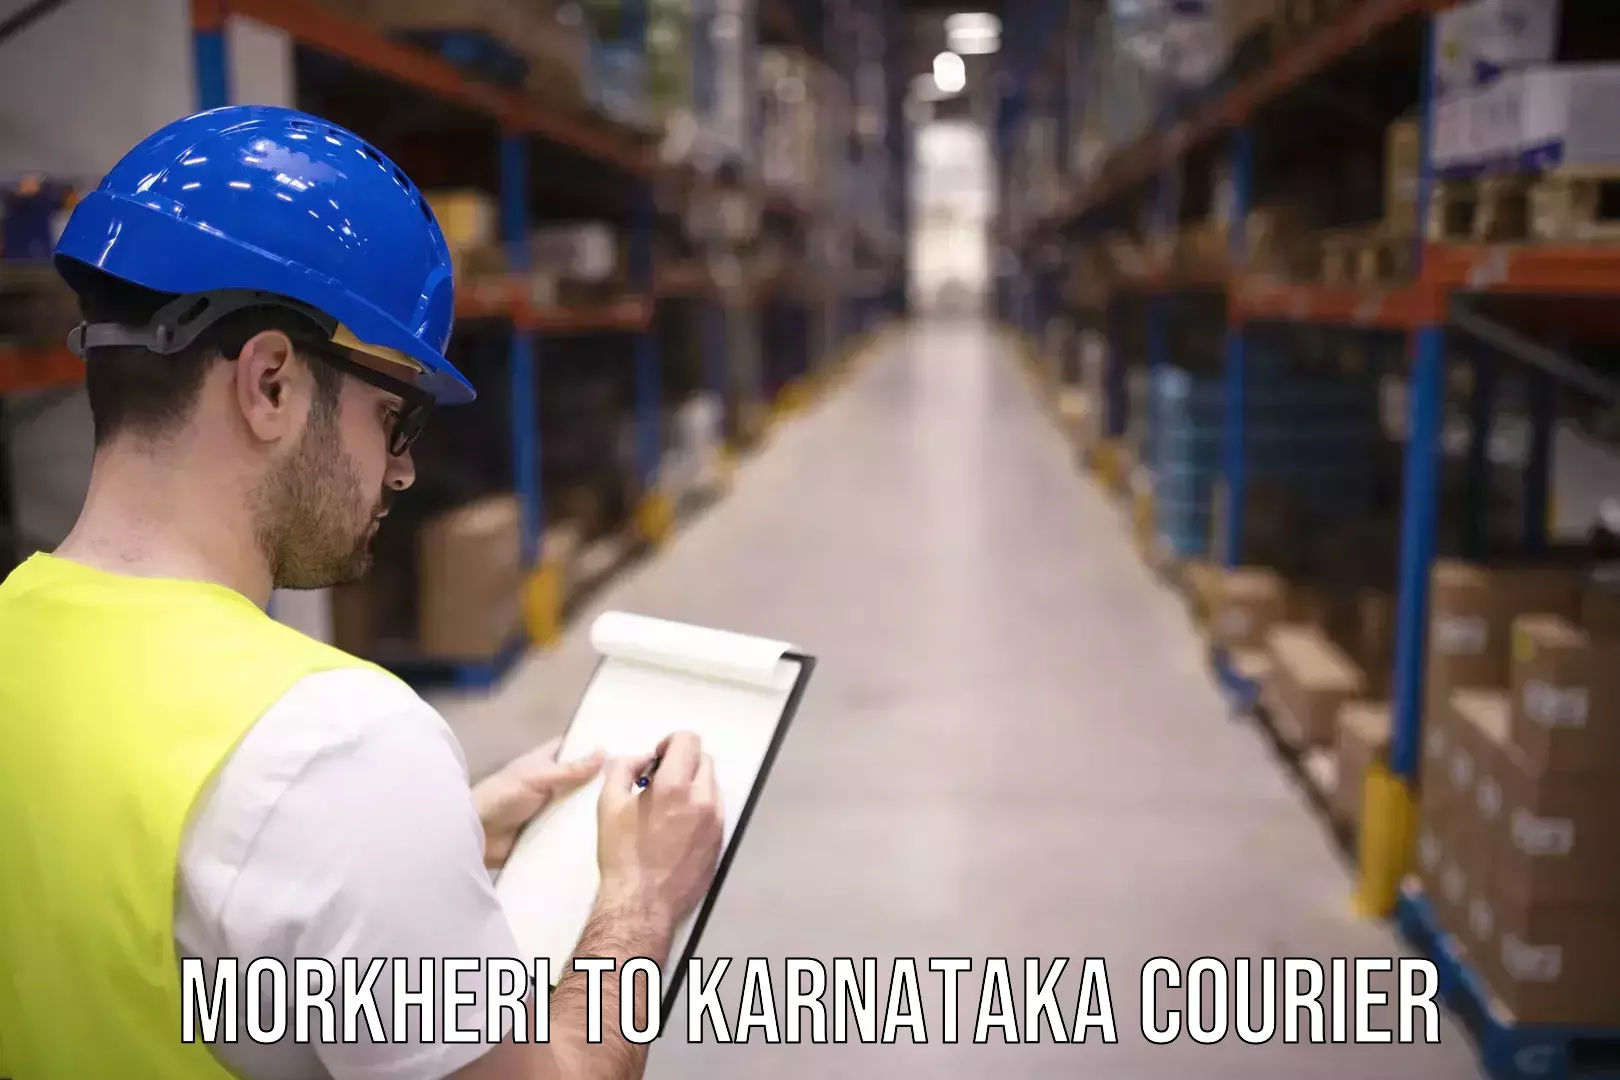 Fast delivery service Morkheri to Karnataka